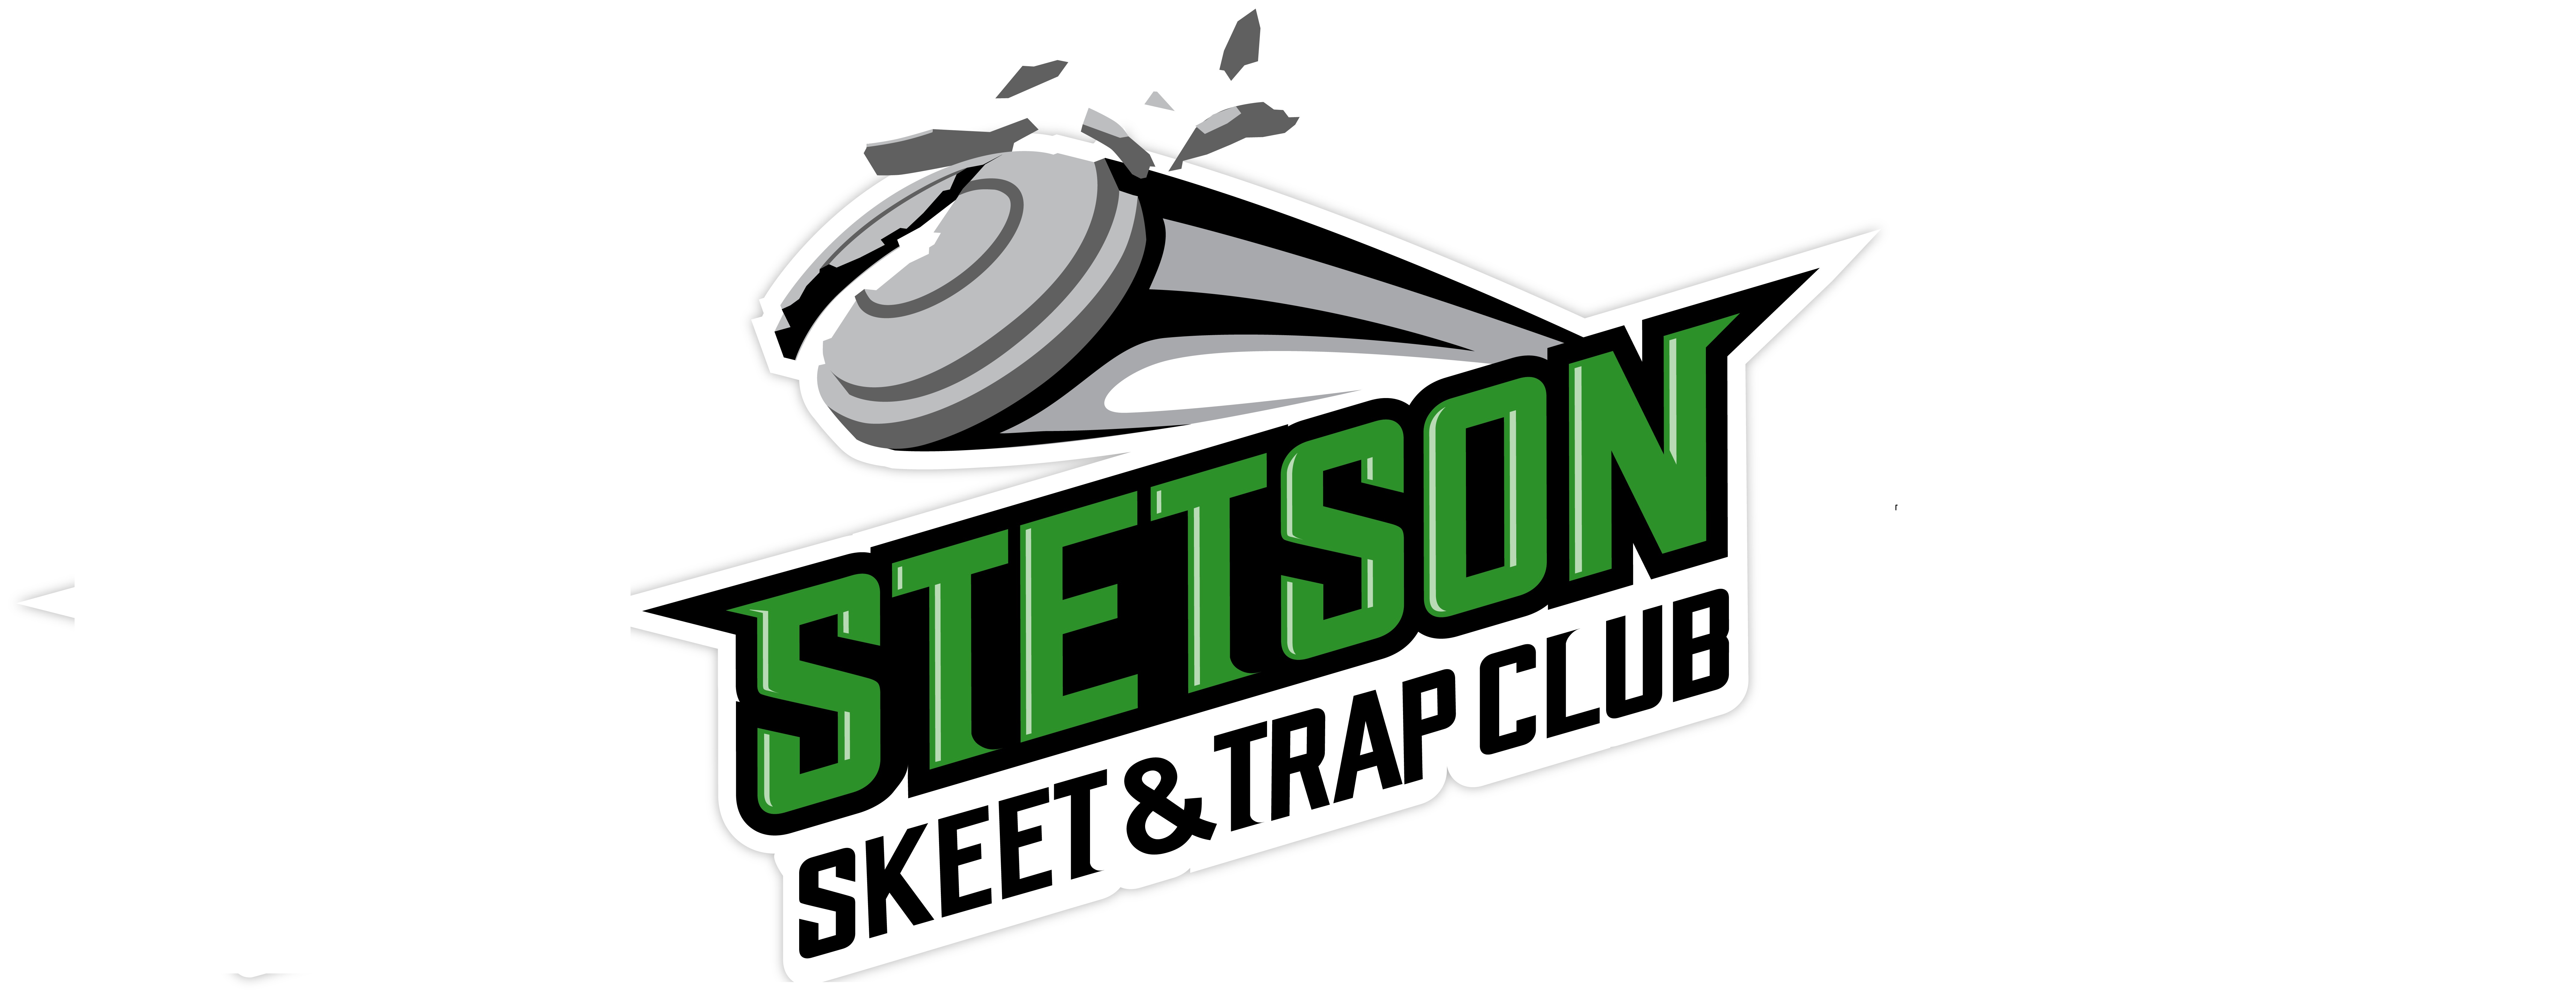 Skeet and Trap Club